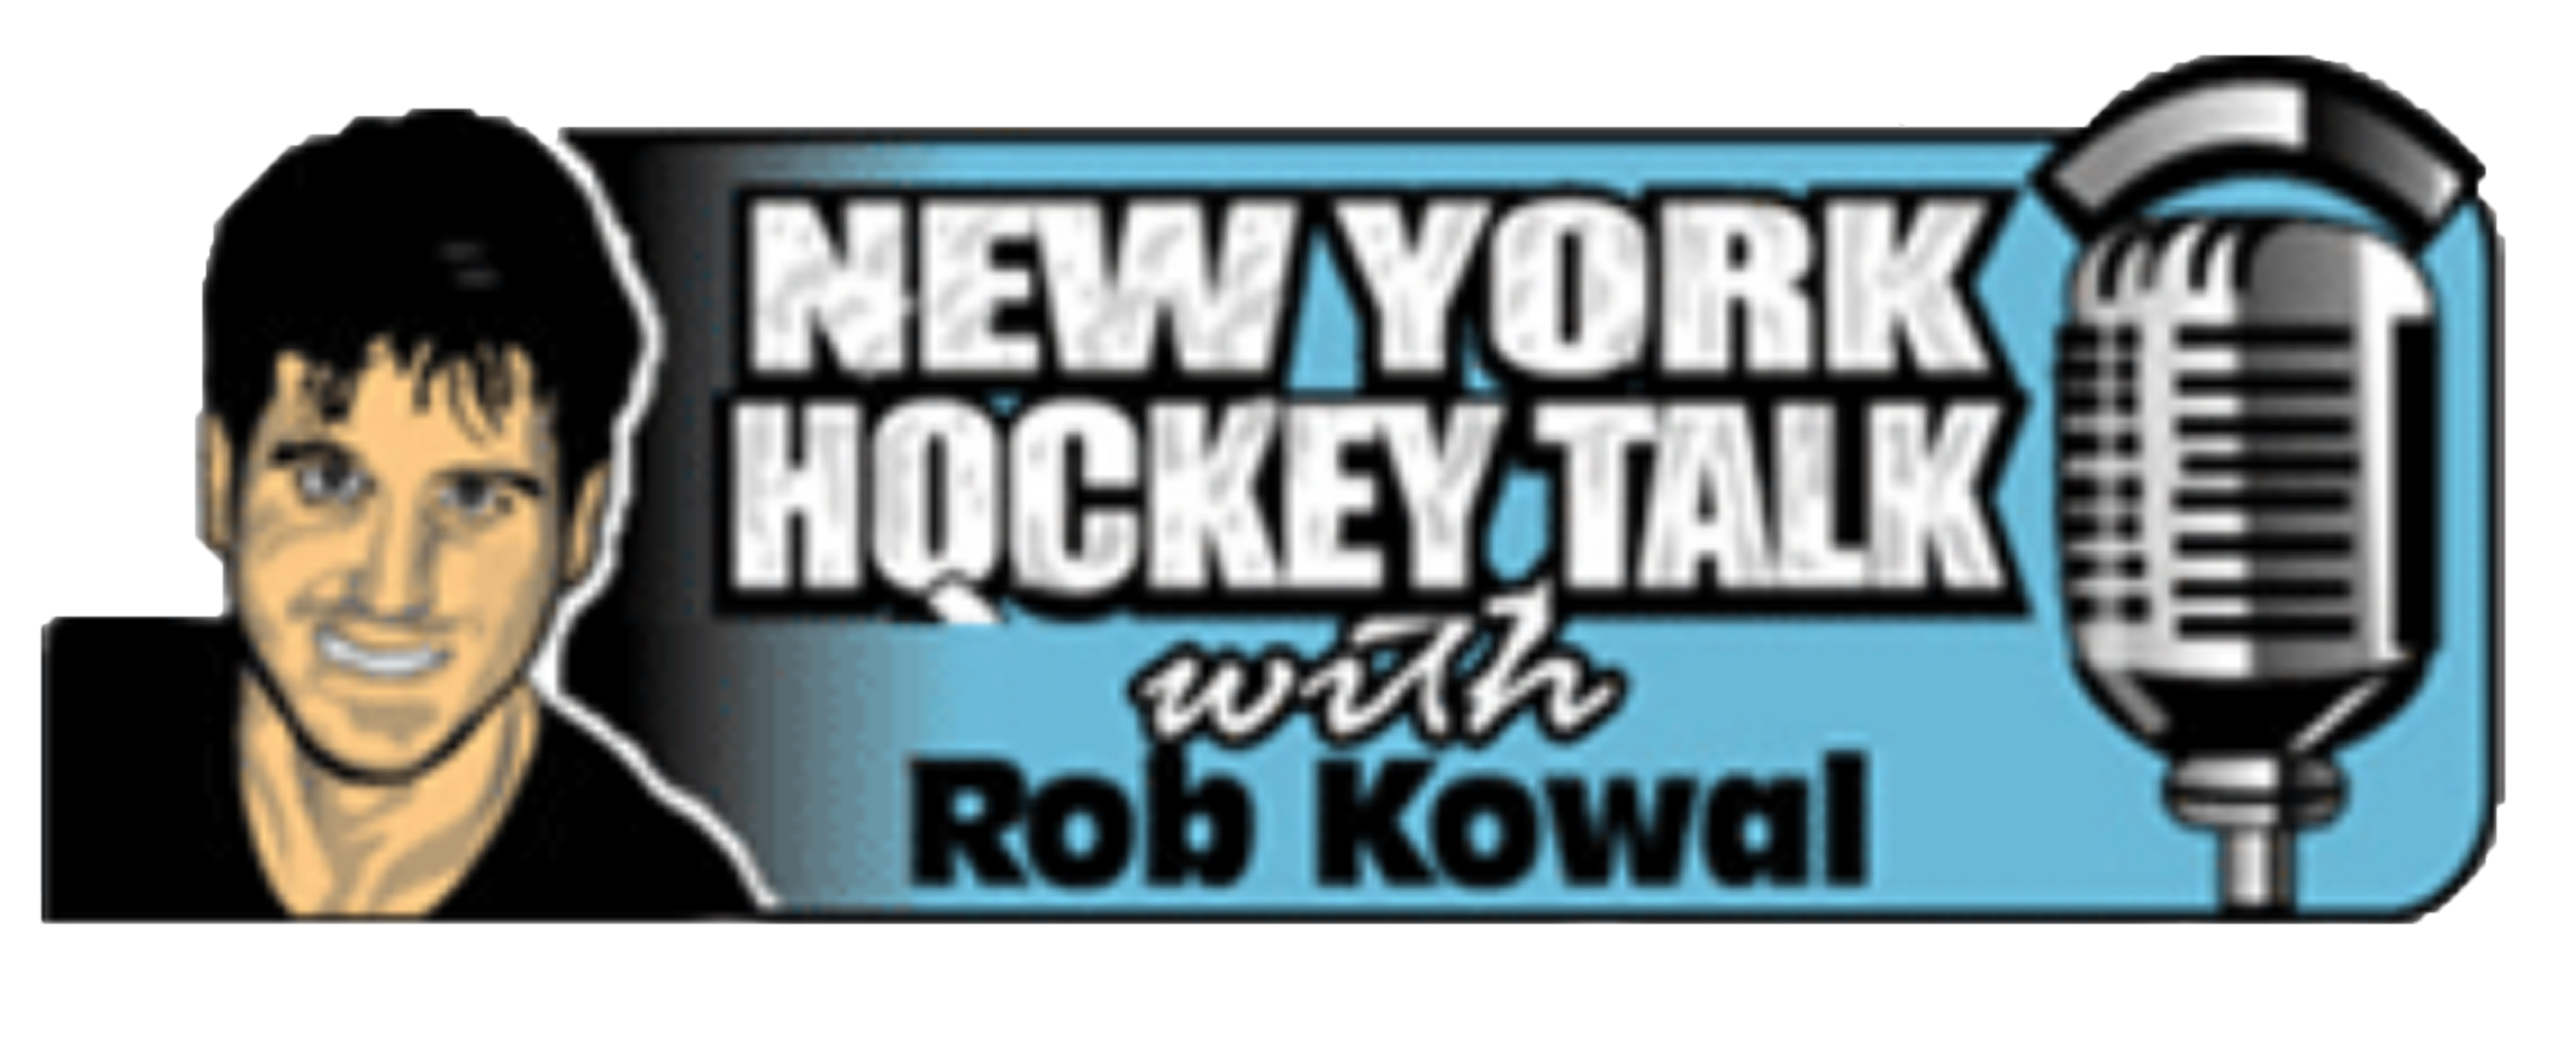 New York Hockey Talk